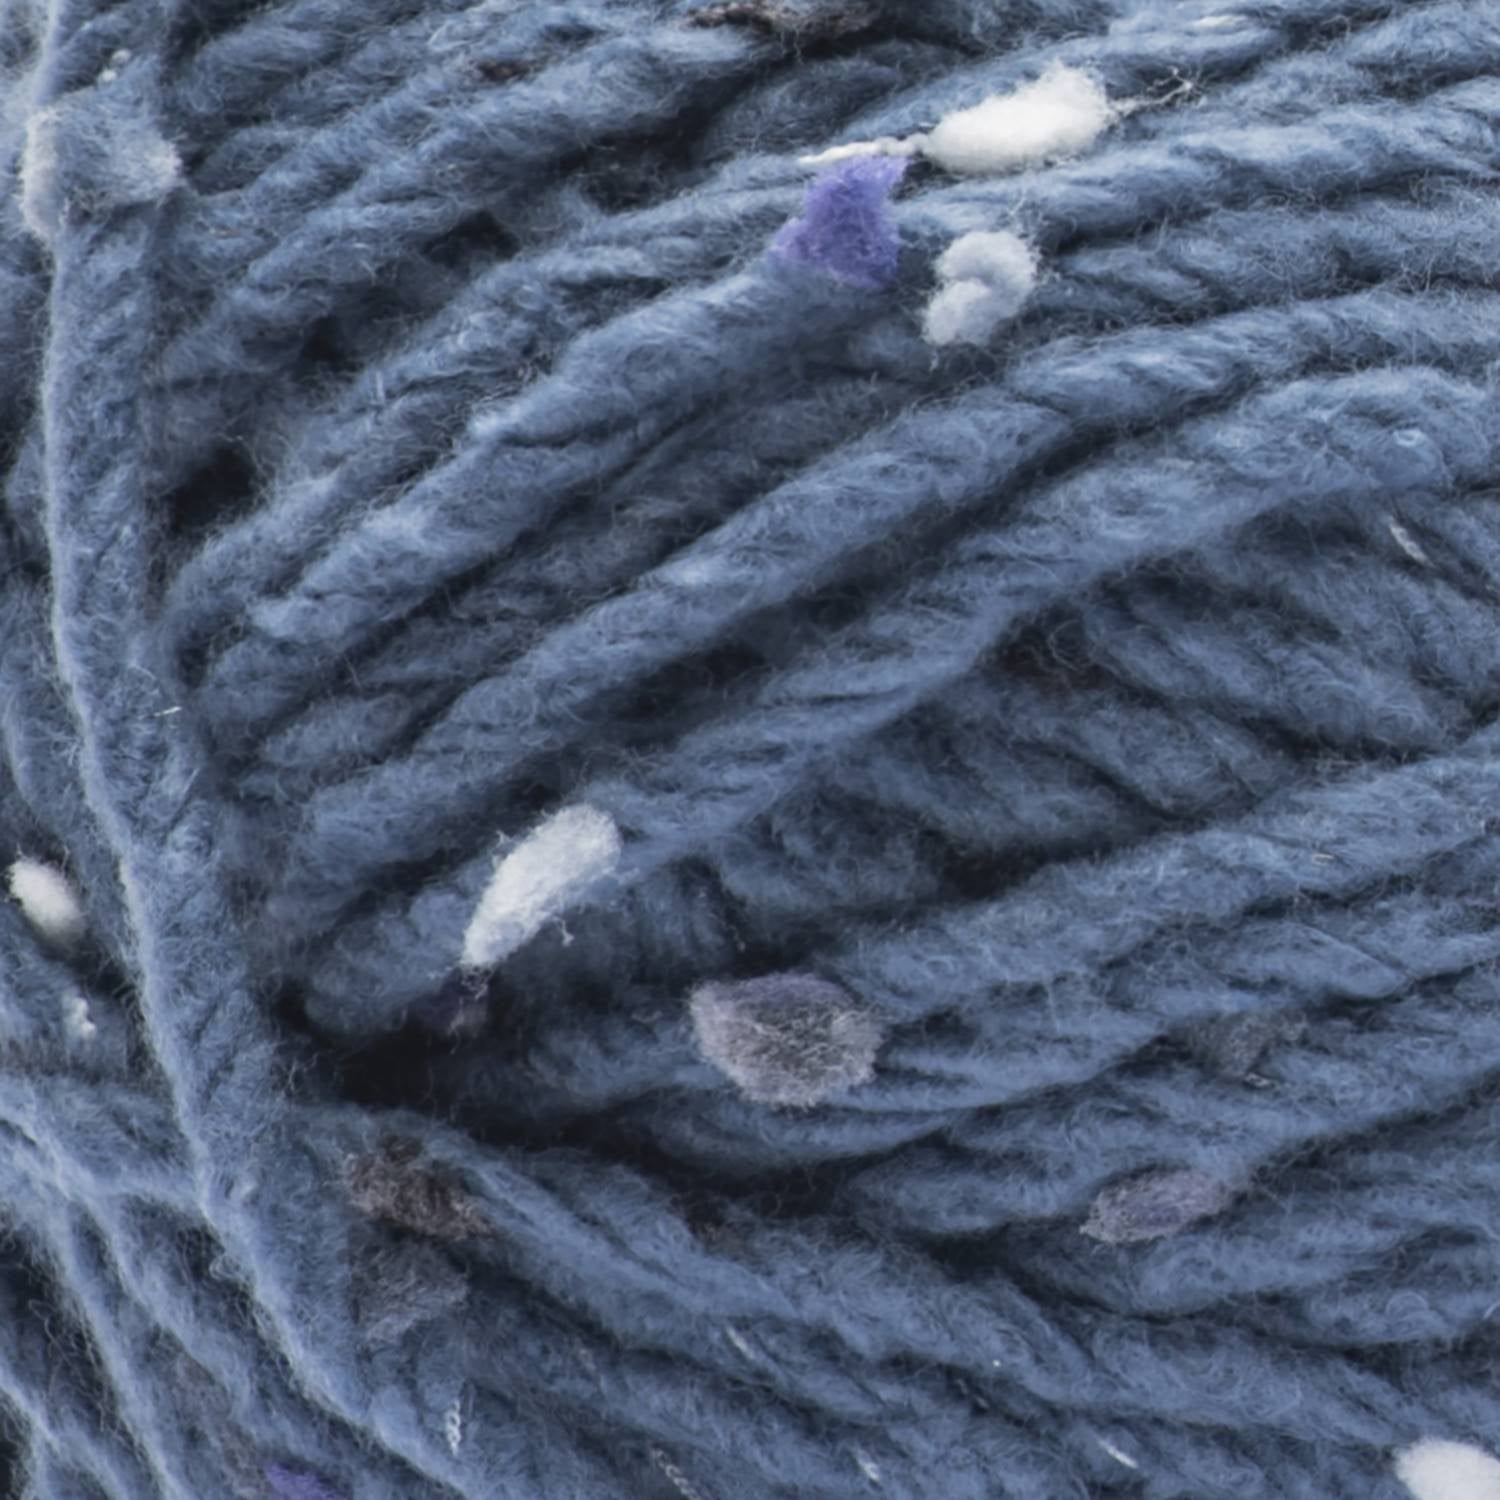 Bernat Forever Fleece Tweeds Yarn (250g/8.8oz) Rolling Sky Tweed